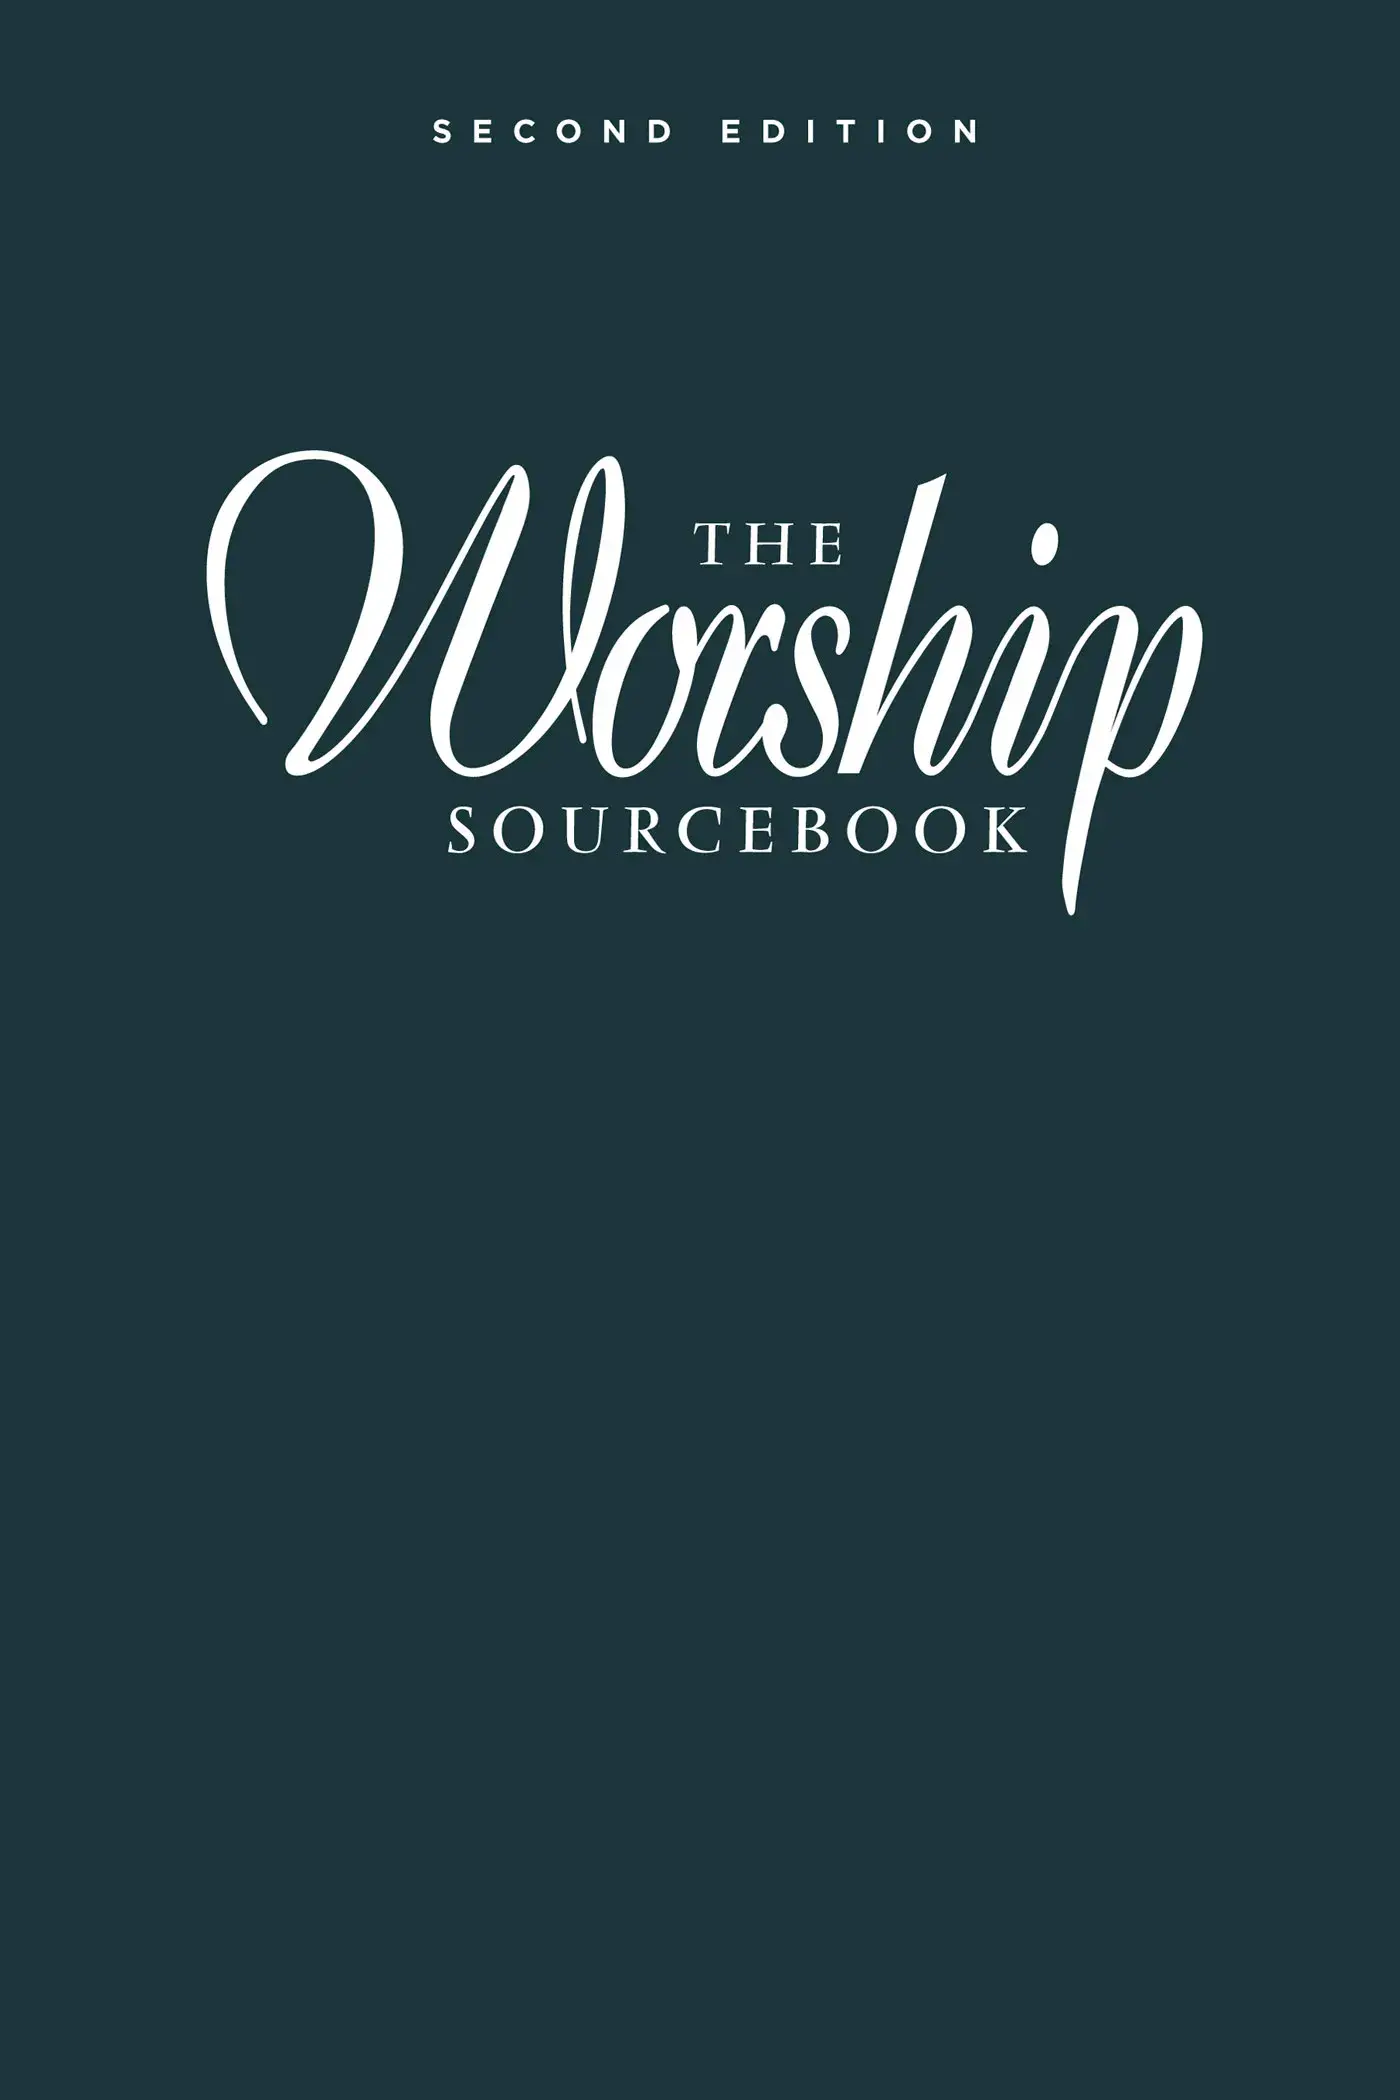 WorshipSourcebooksecondedition.jpg